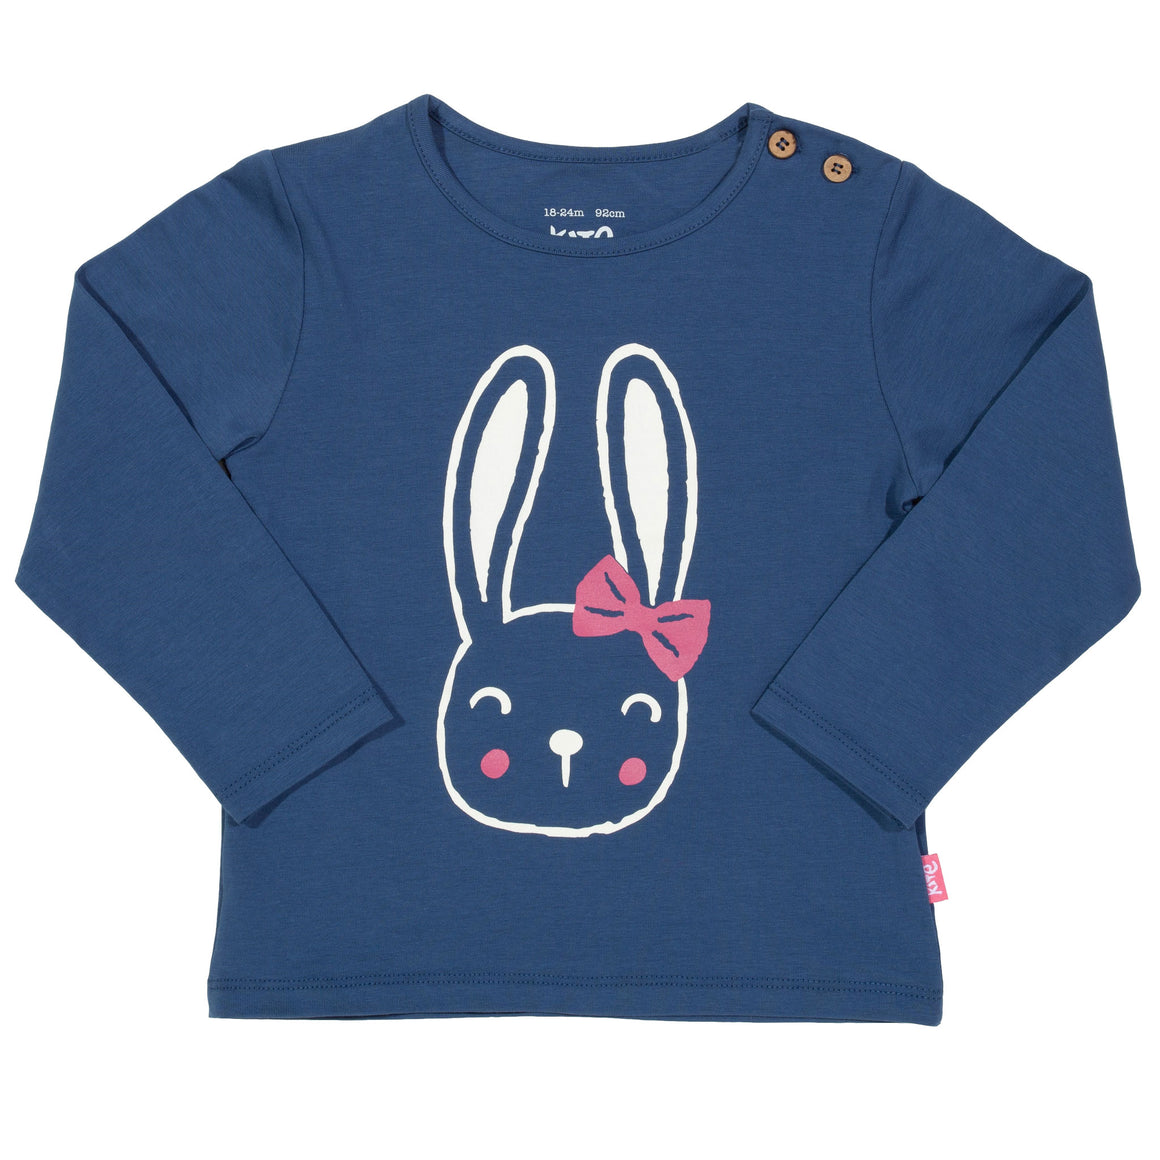 Happy Hare t-shirt